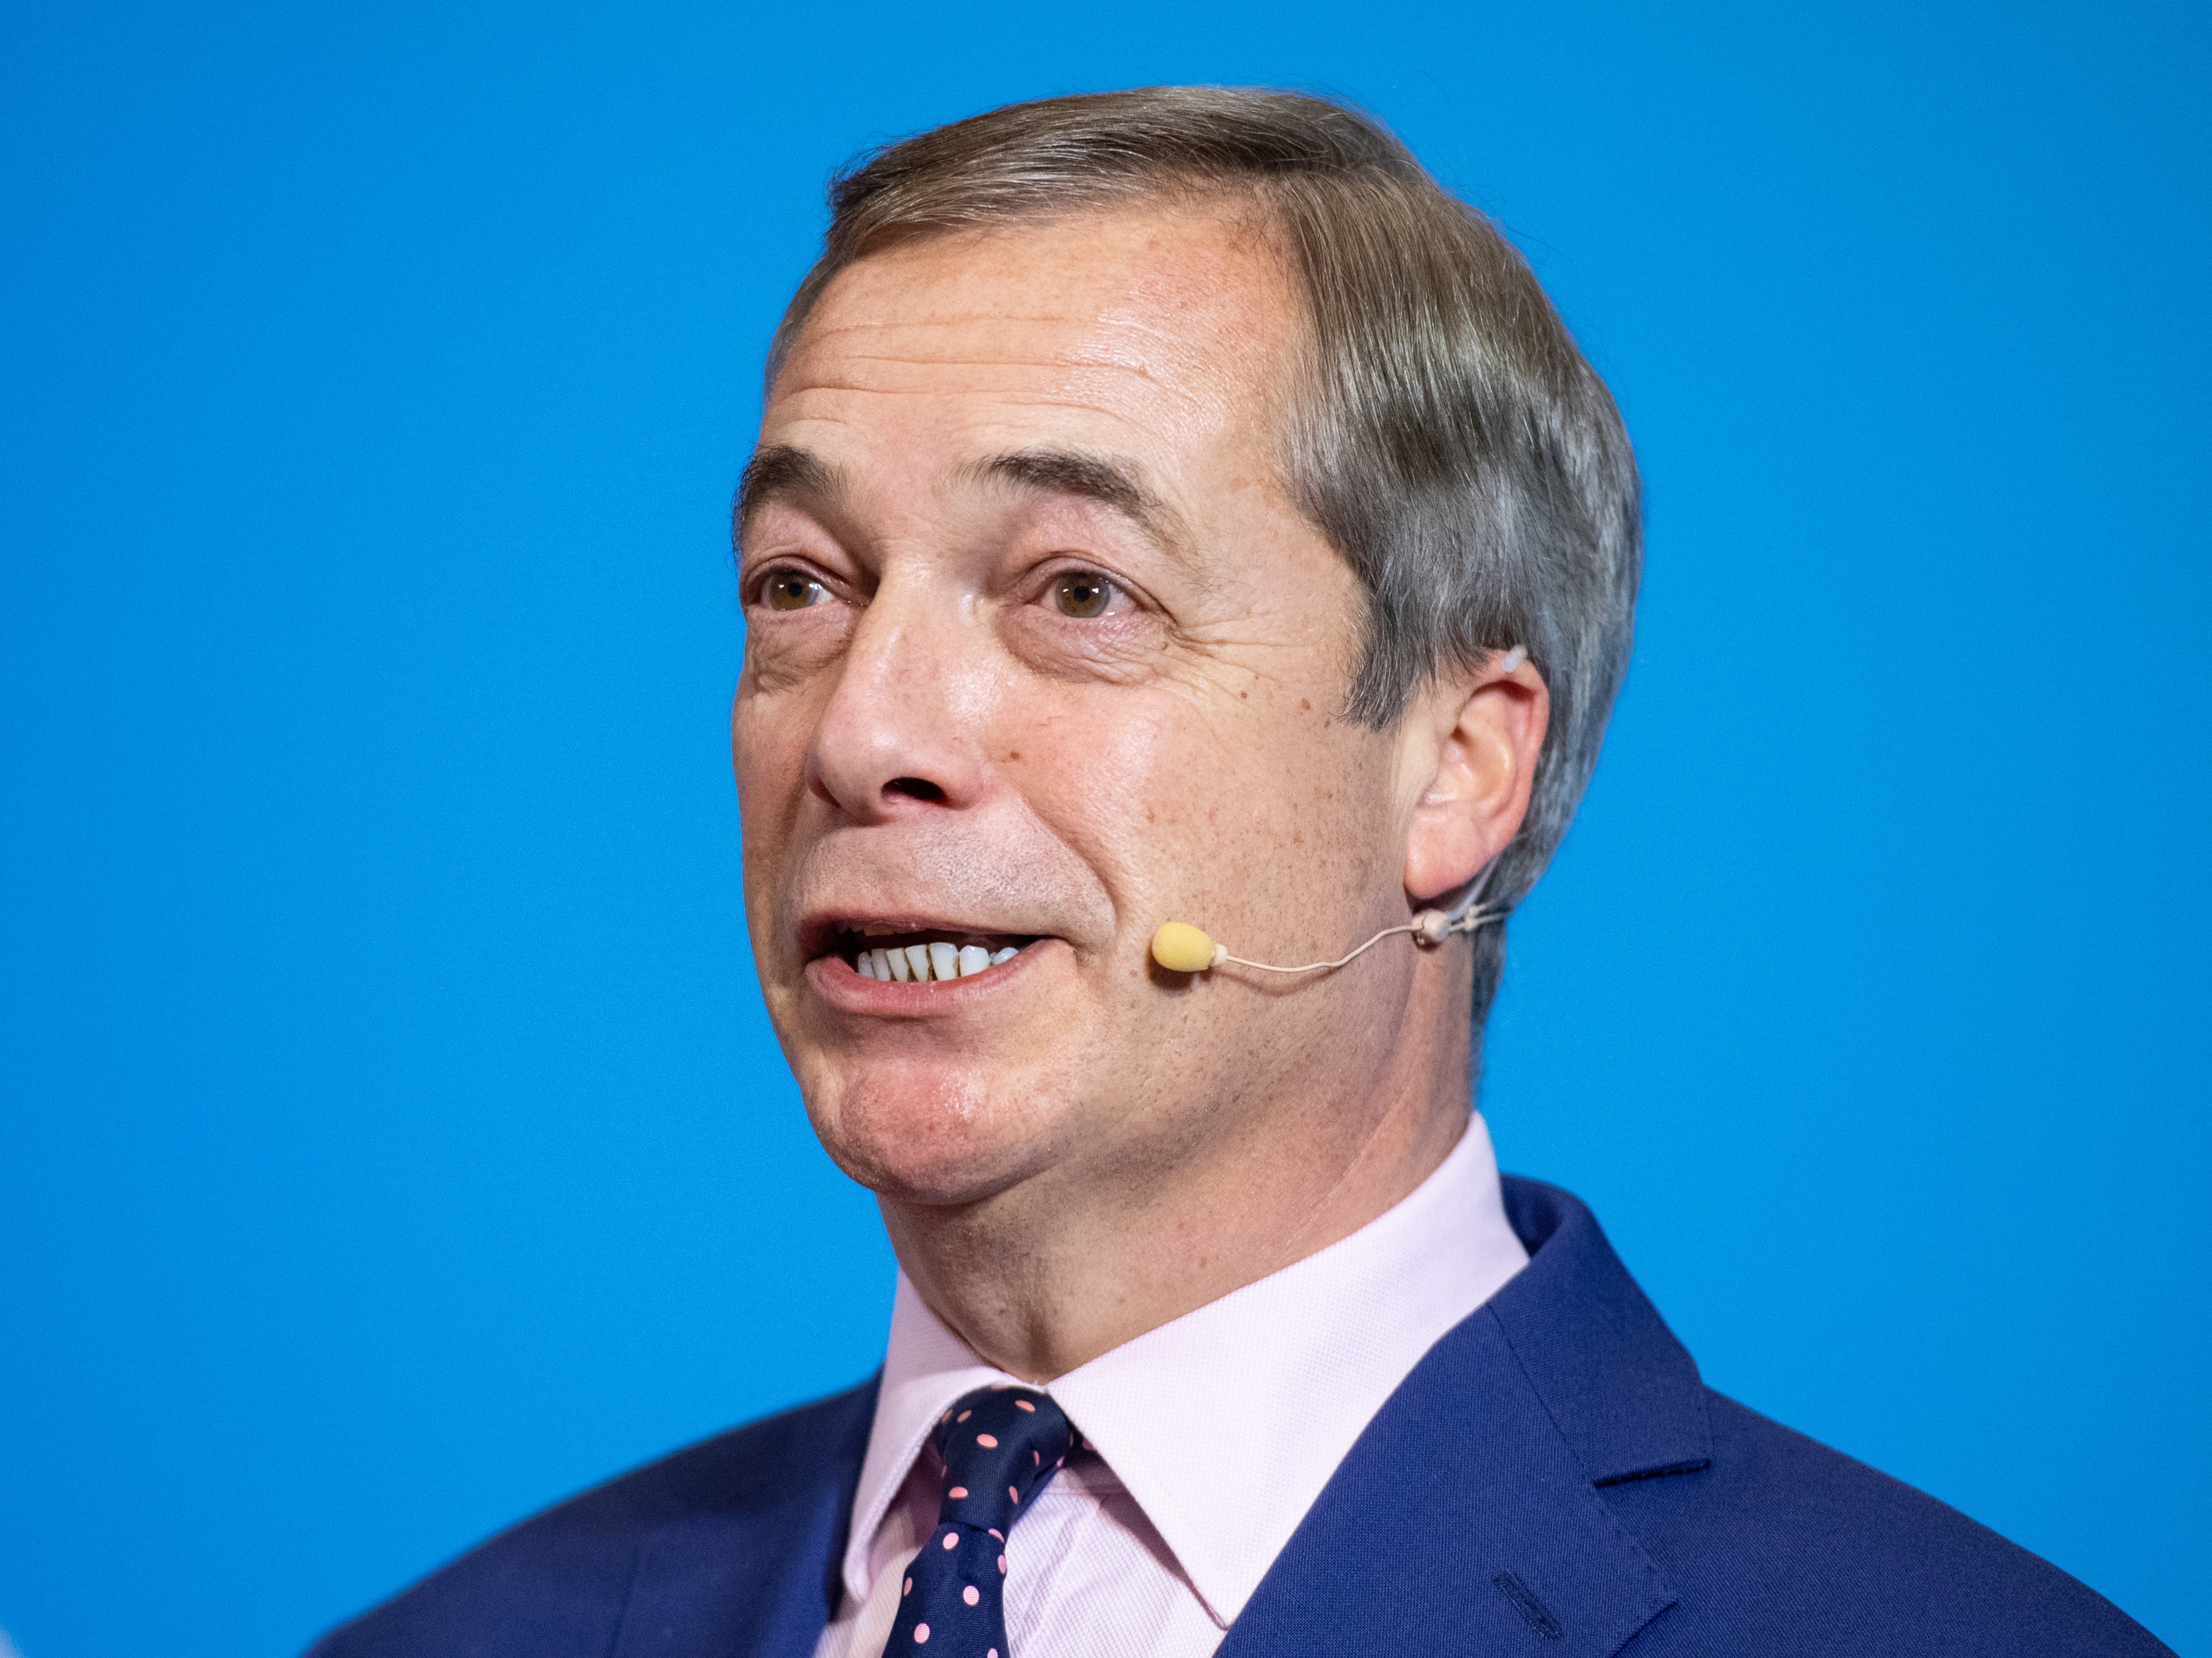 Nigel Farage, honorary president of Reform UK party